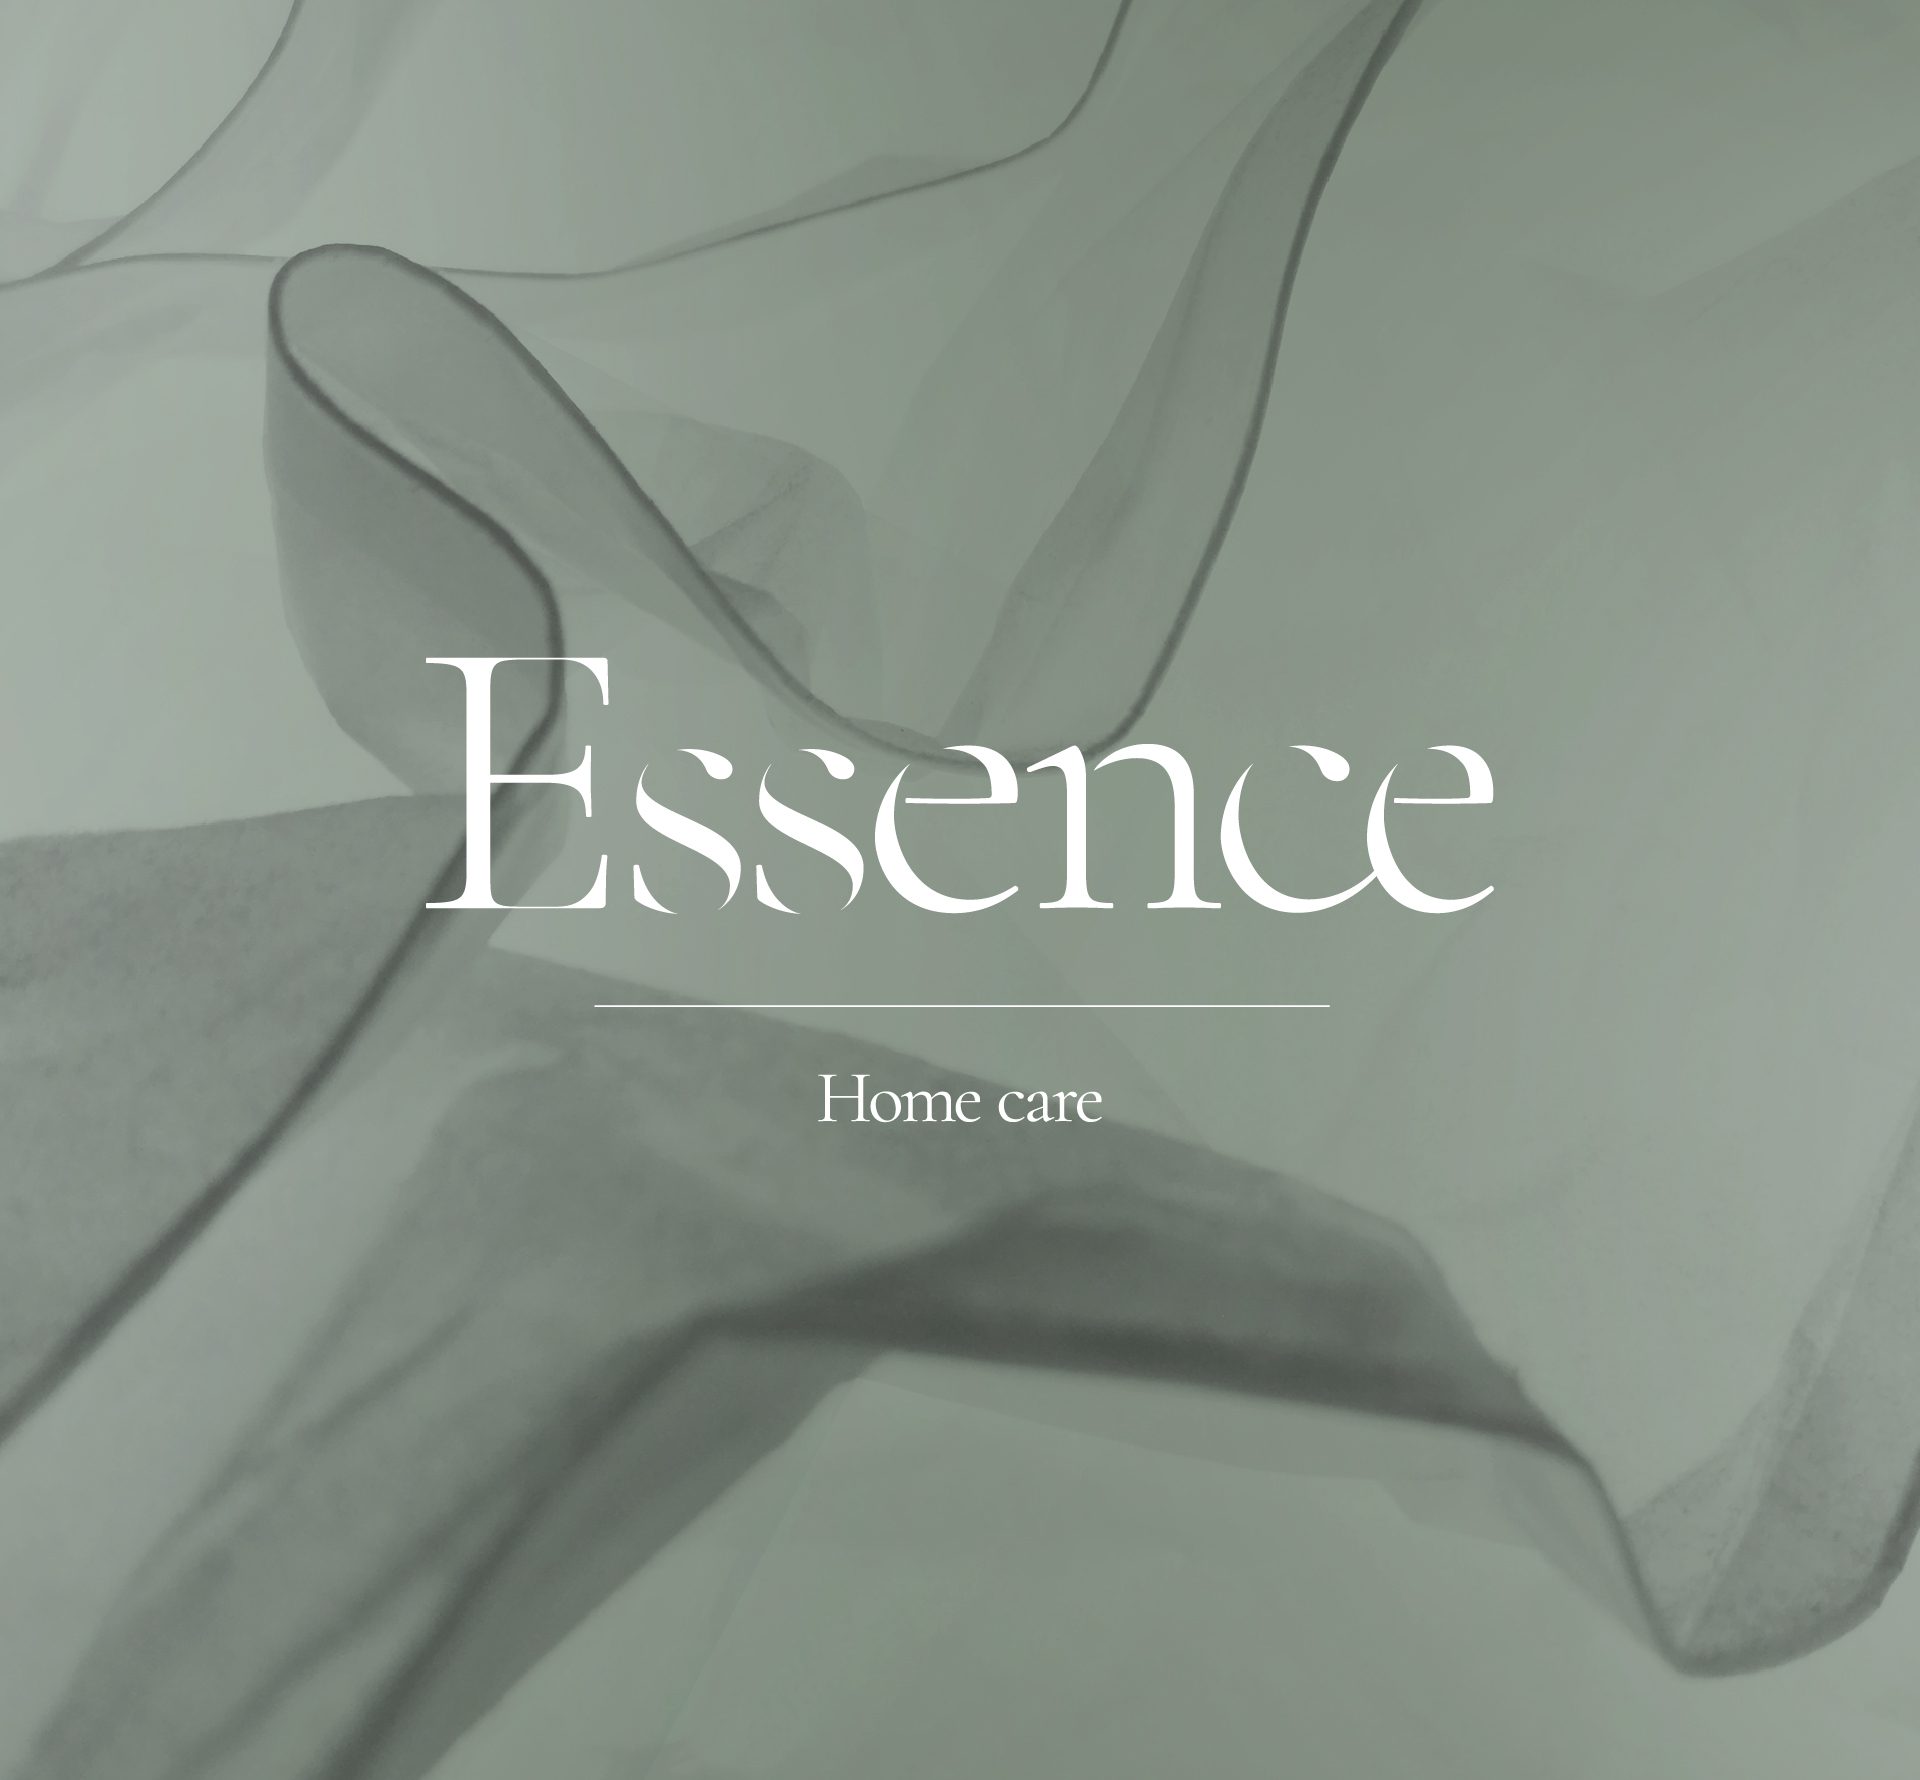 Essence - a premium botanical home care concept that embraces the circular economy